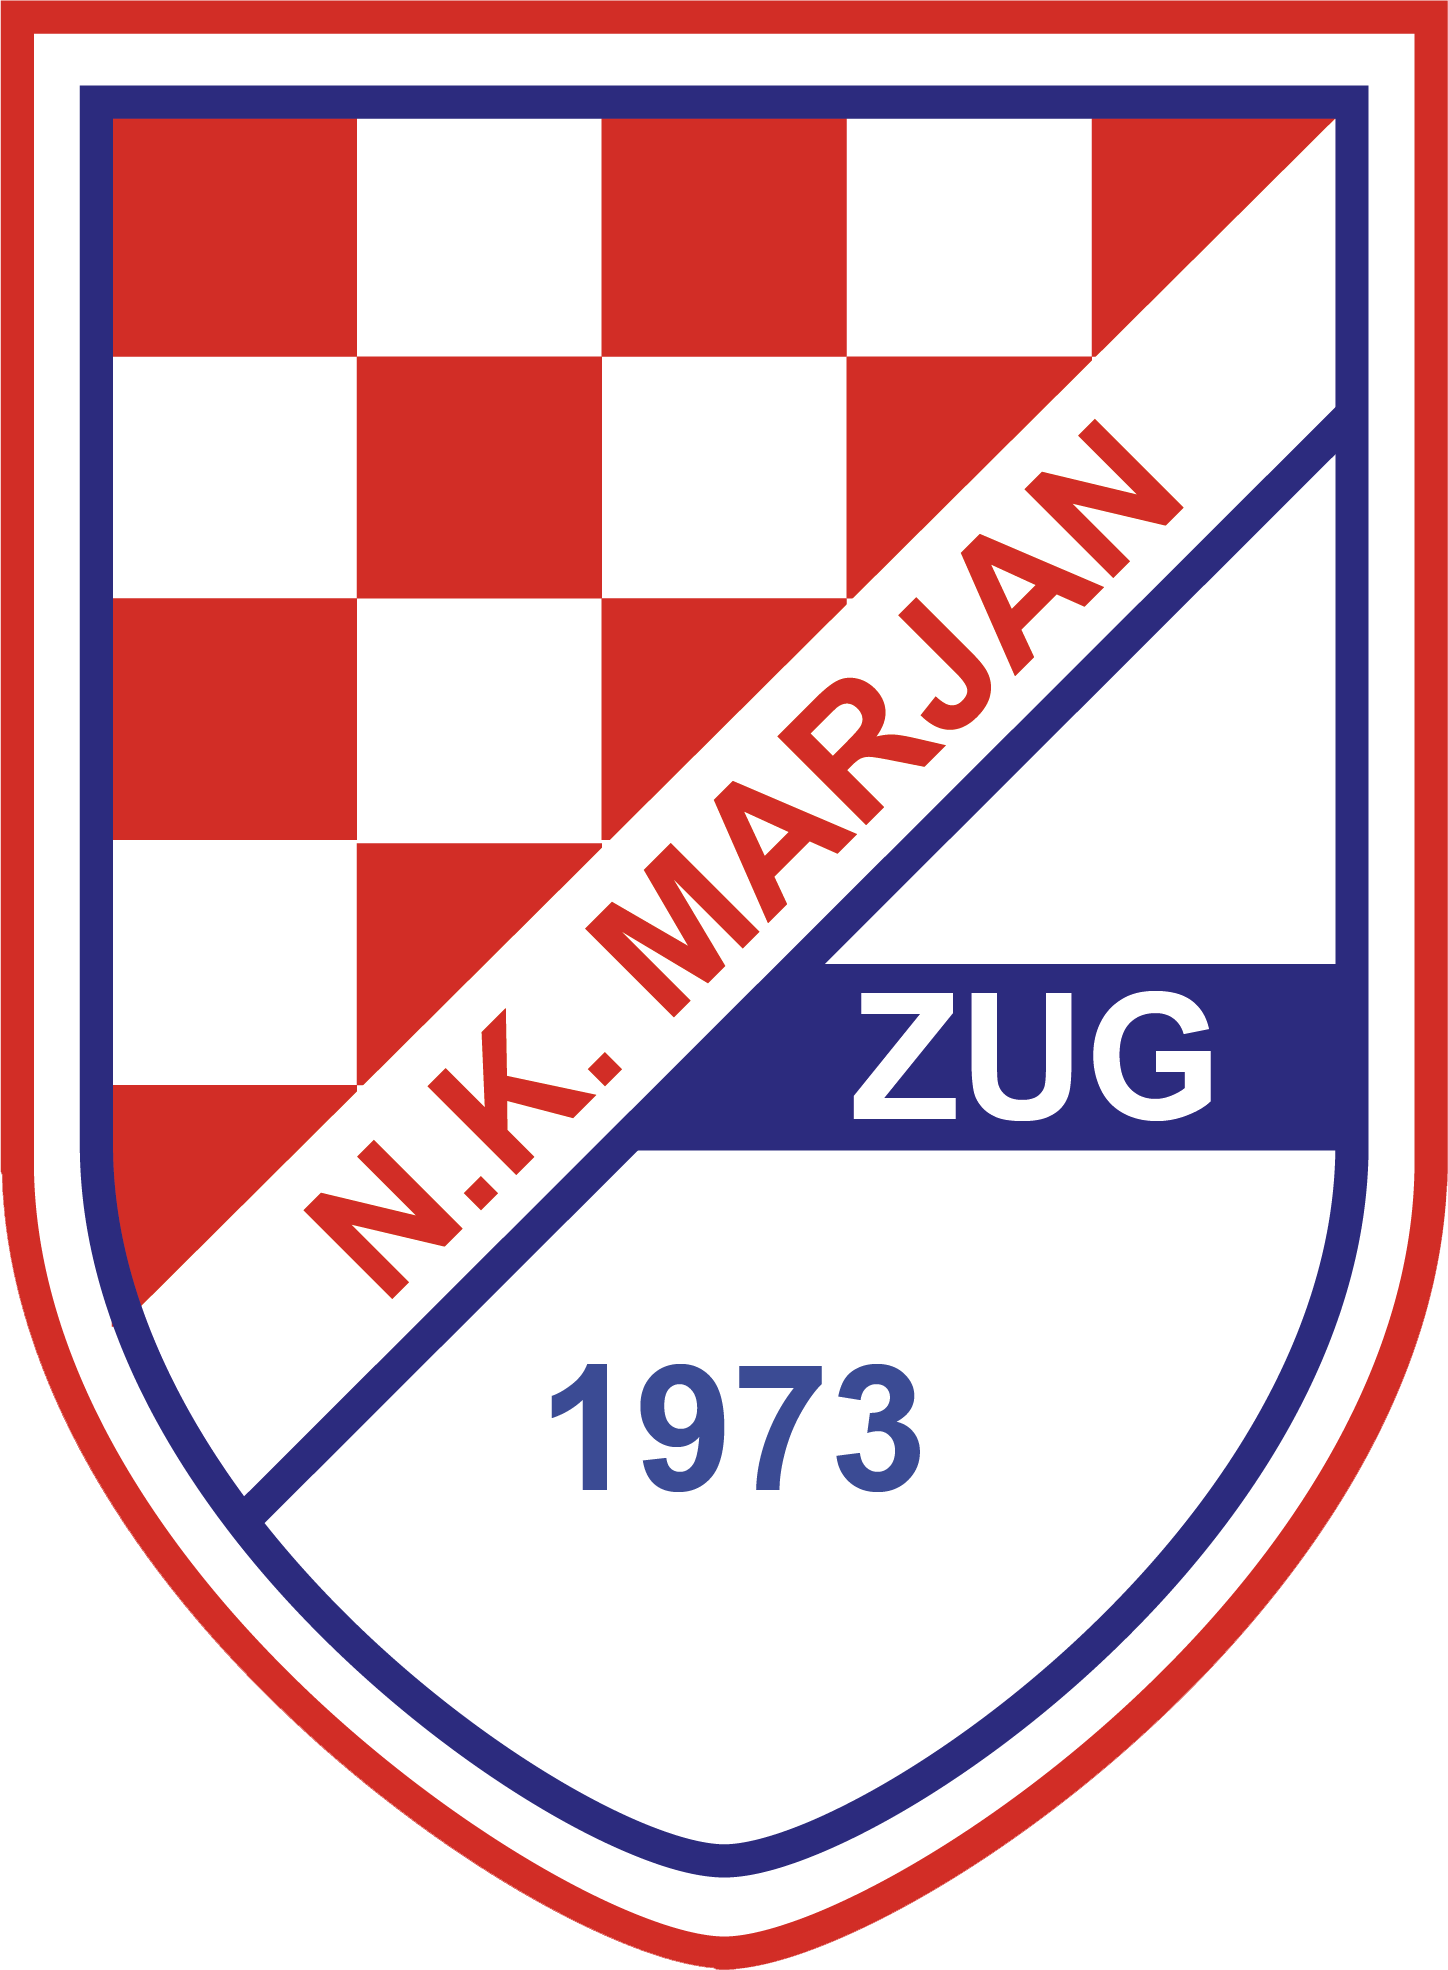 NK Marjan Zug